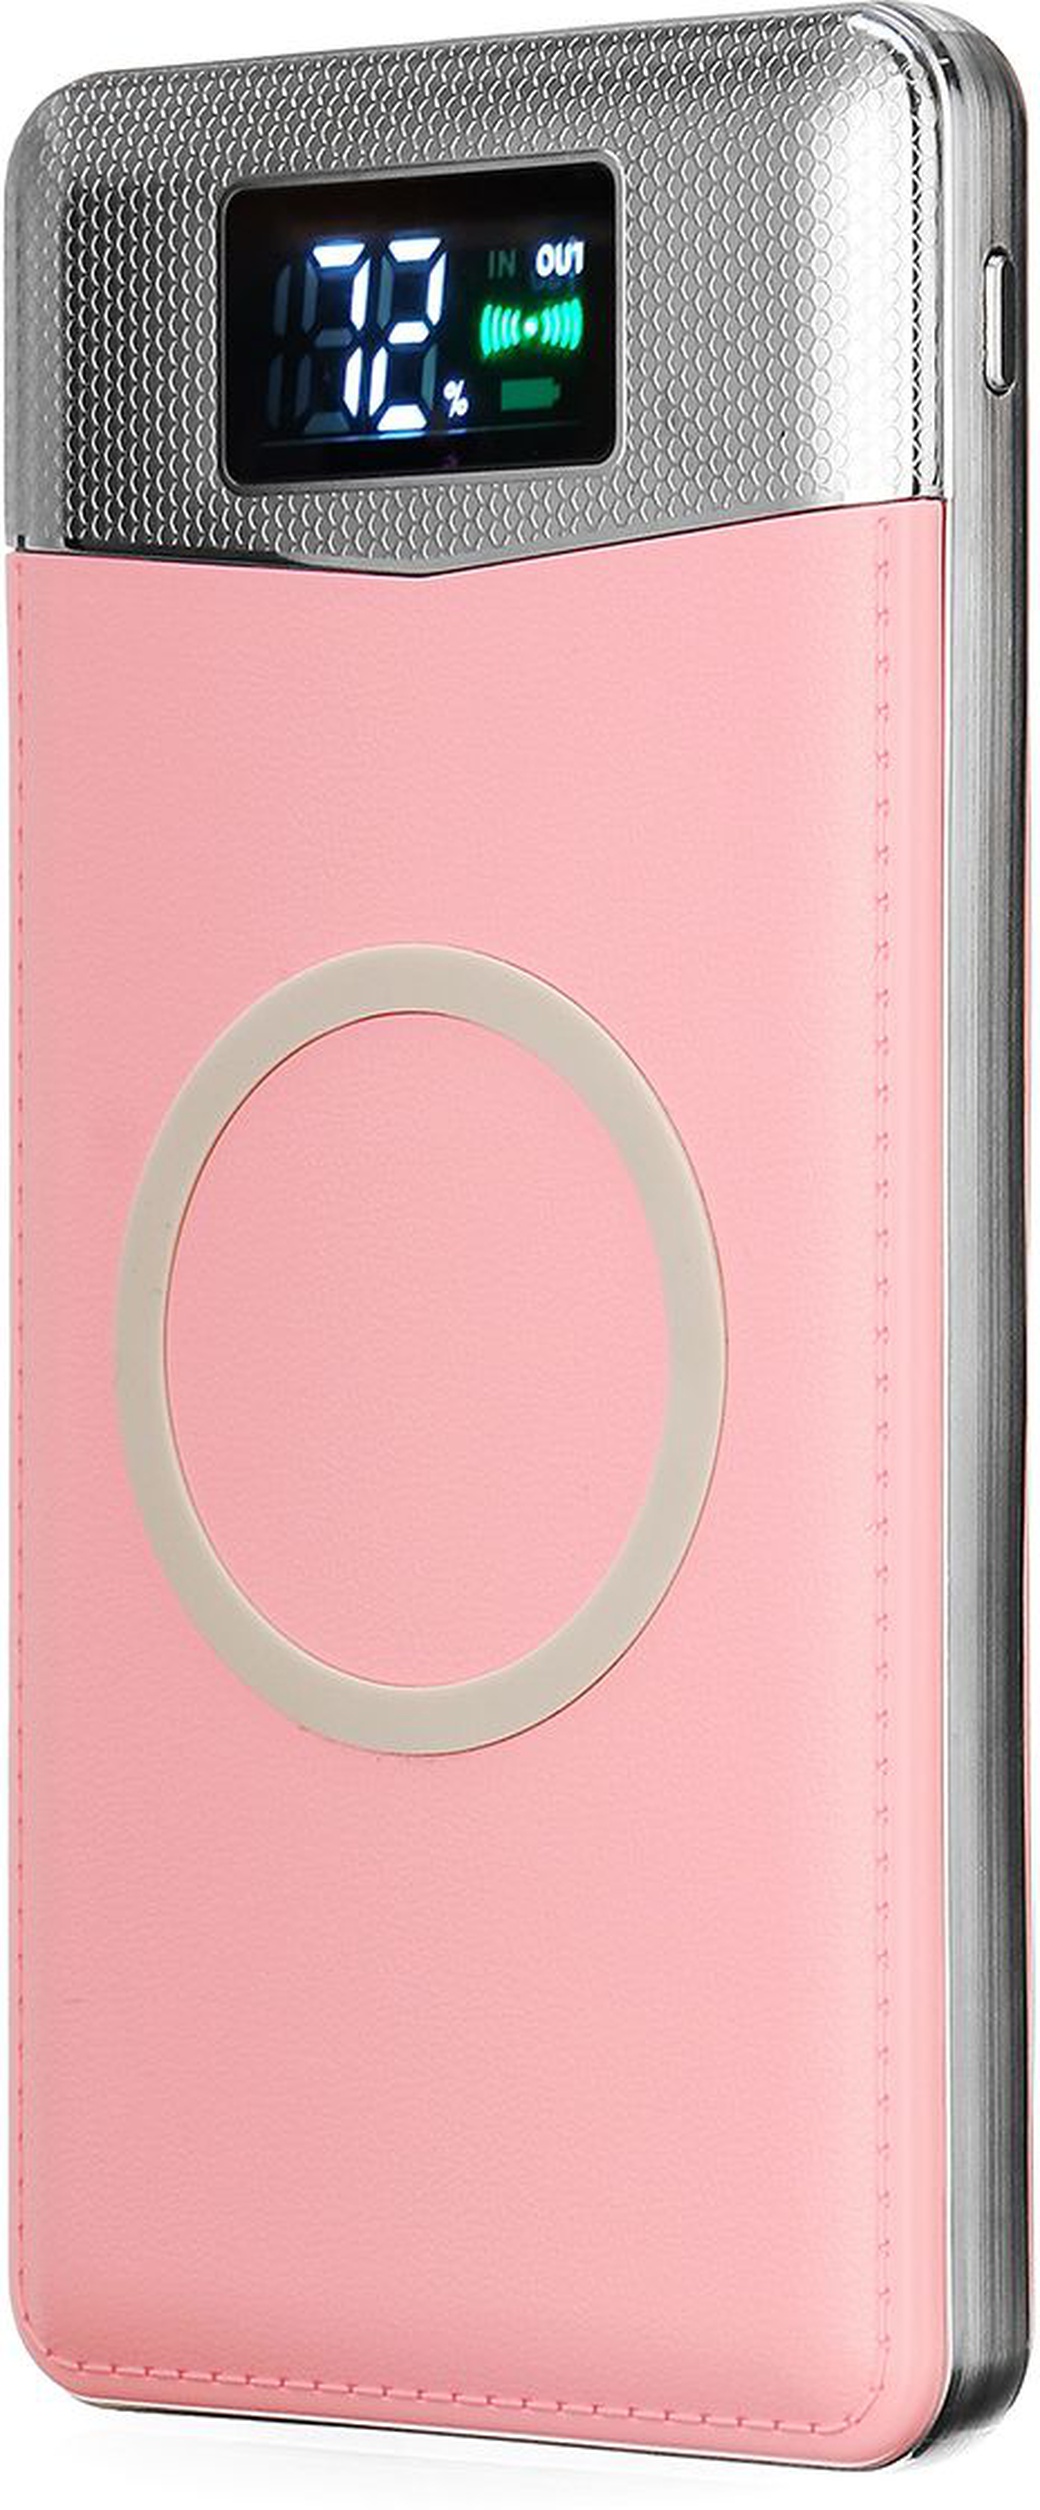 Внешний аккумулятор Bakeey 2 in 1 10000mAh, розовый фото